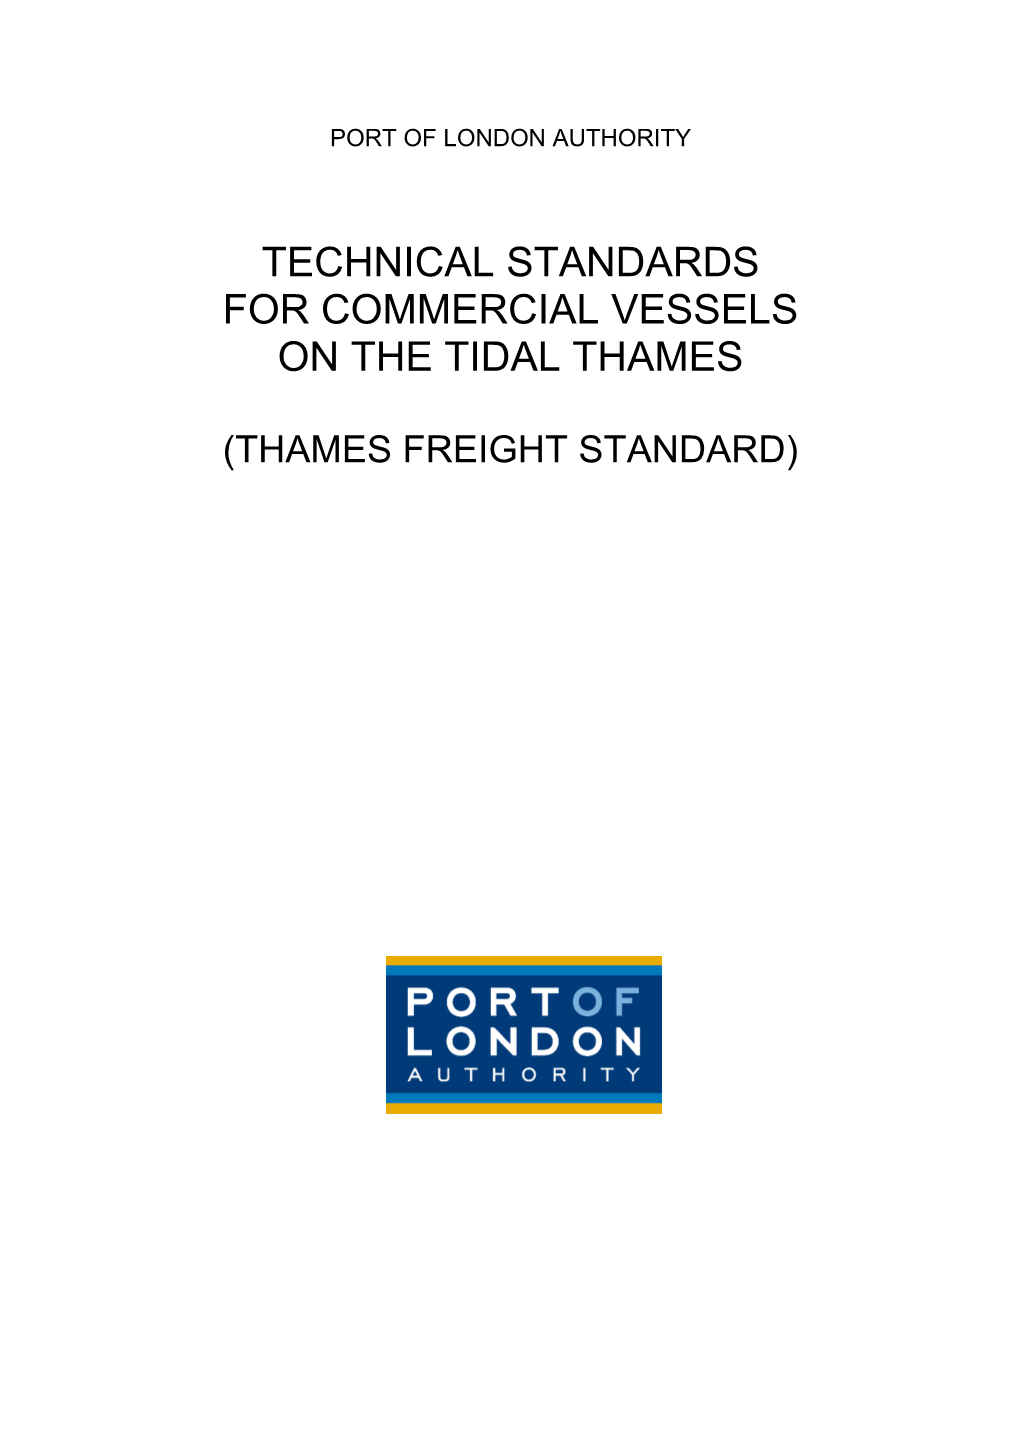 Thames Freight Standard)